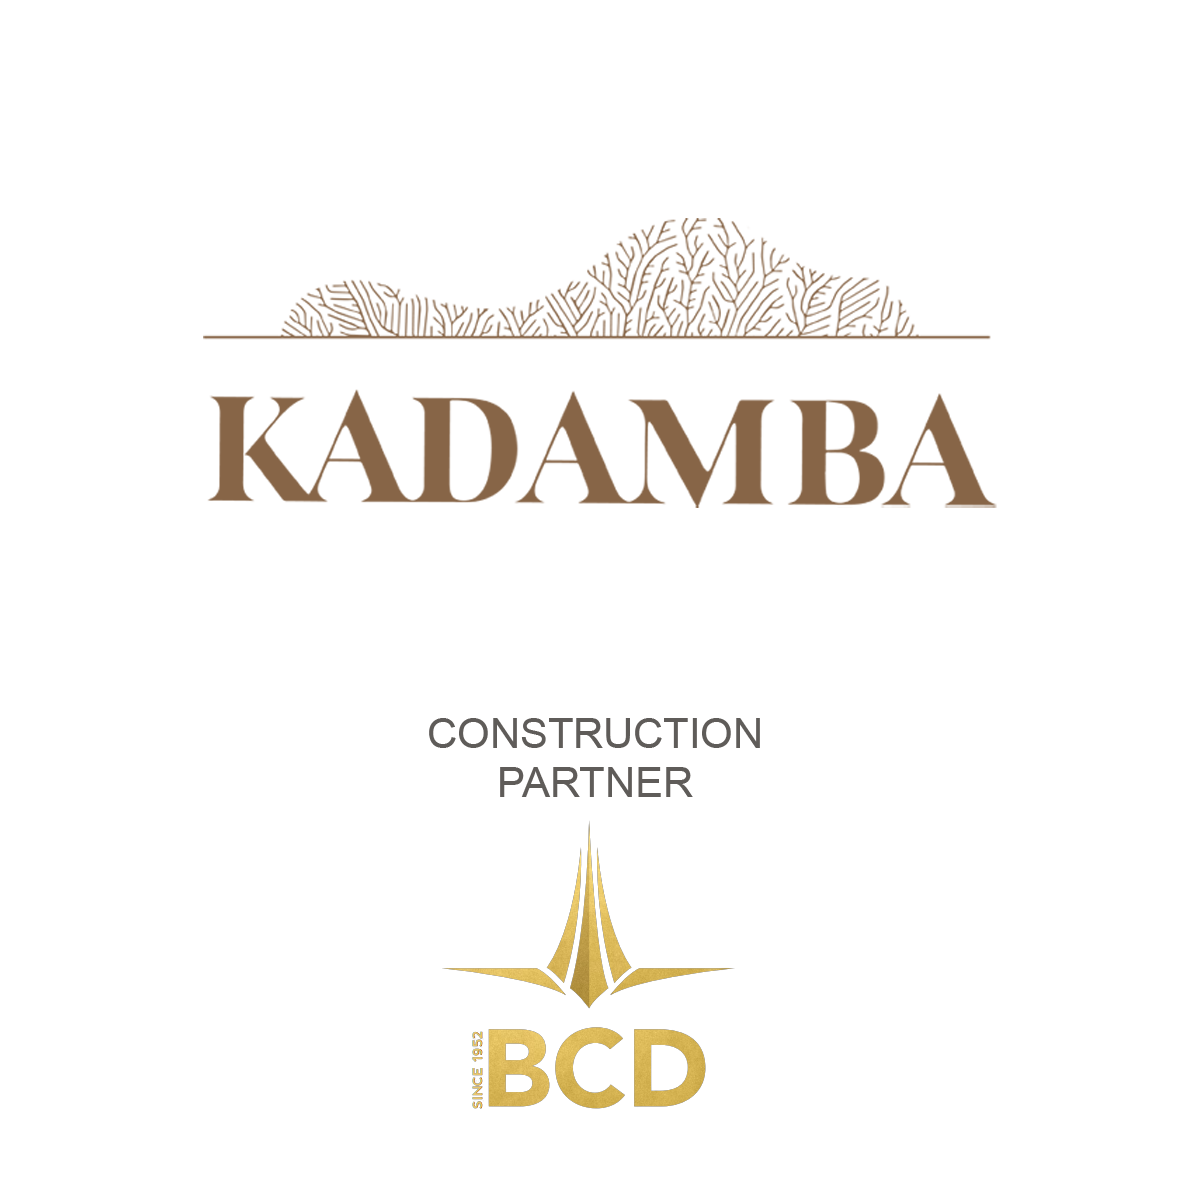 amt kadamba logo